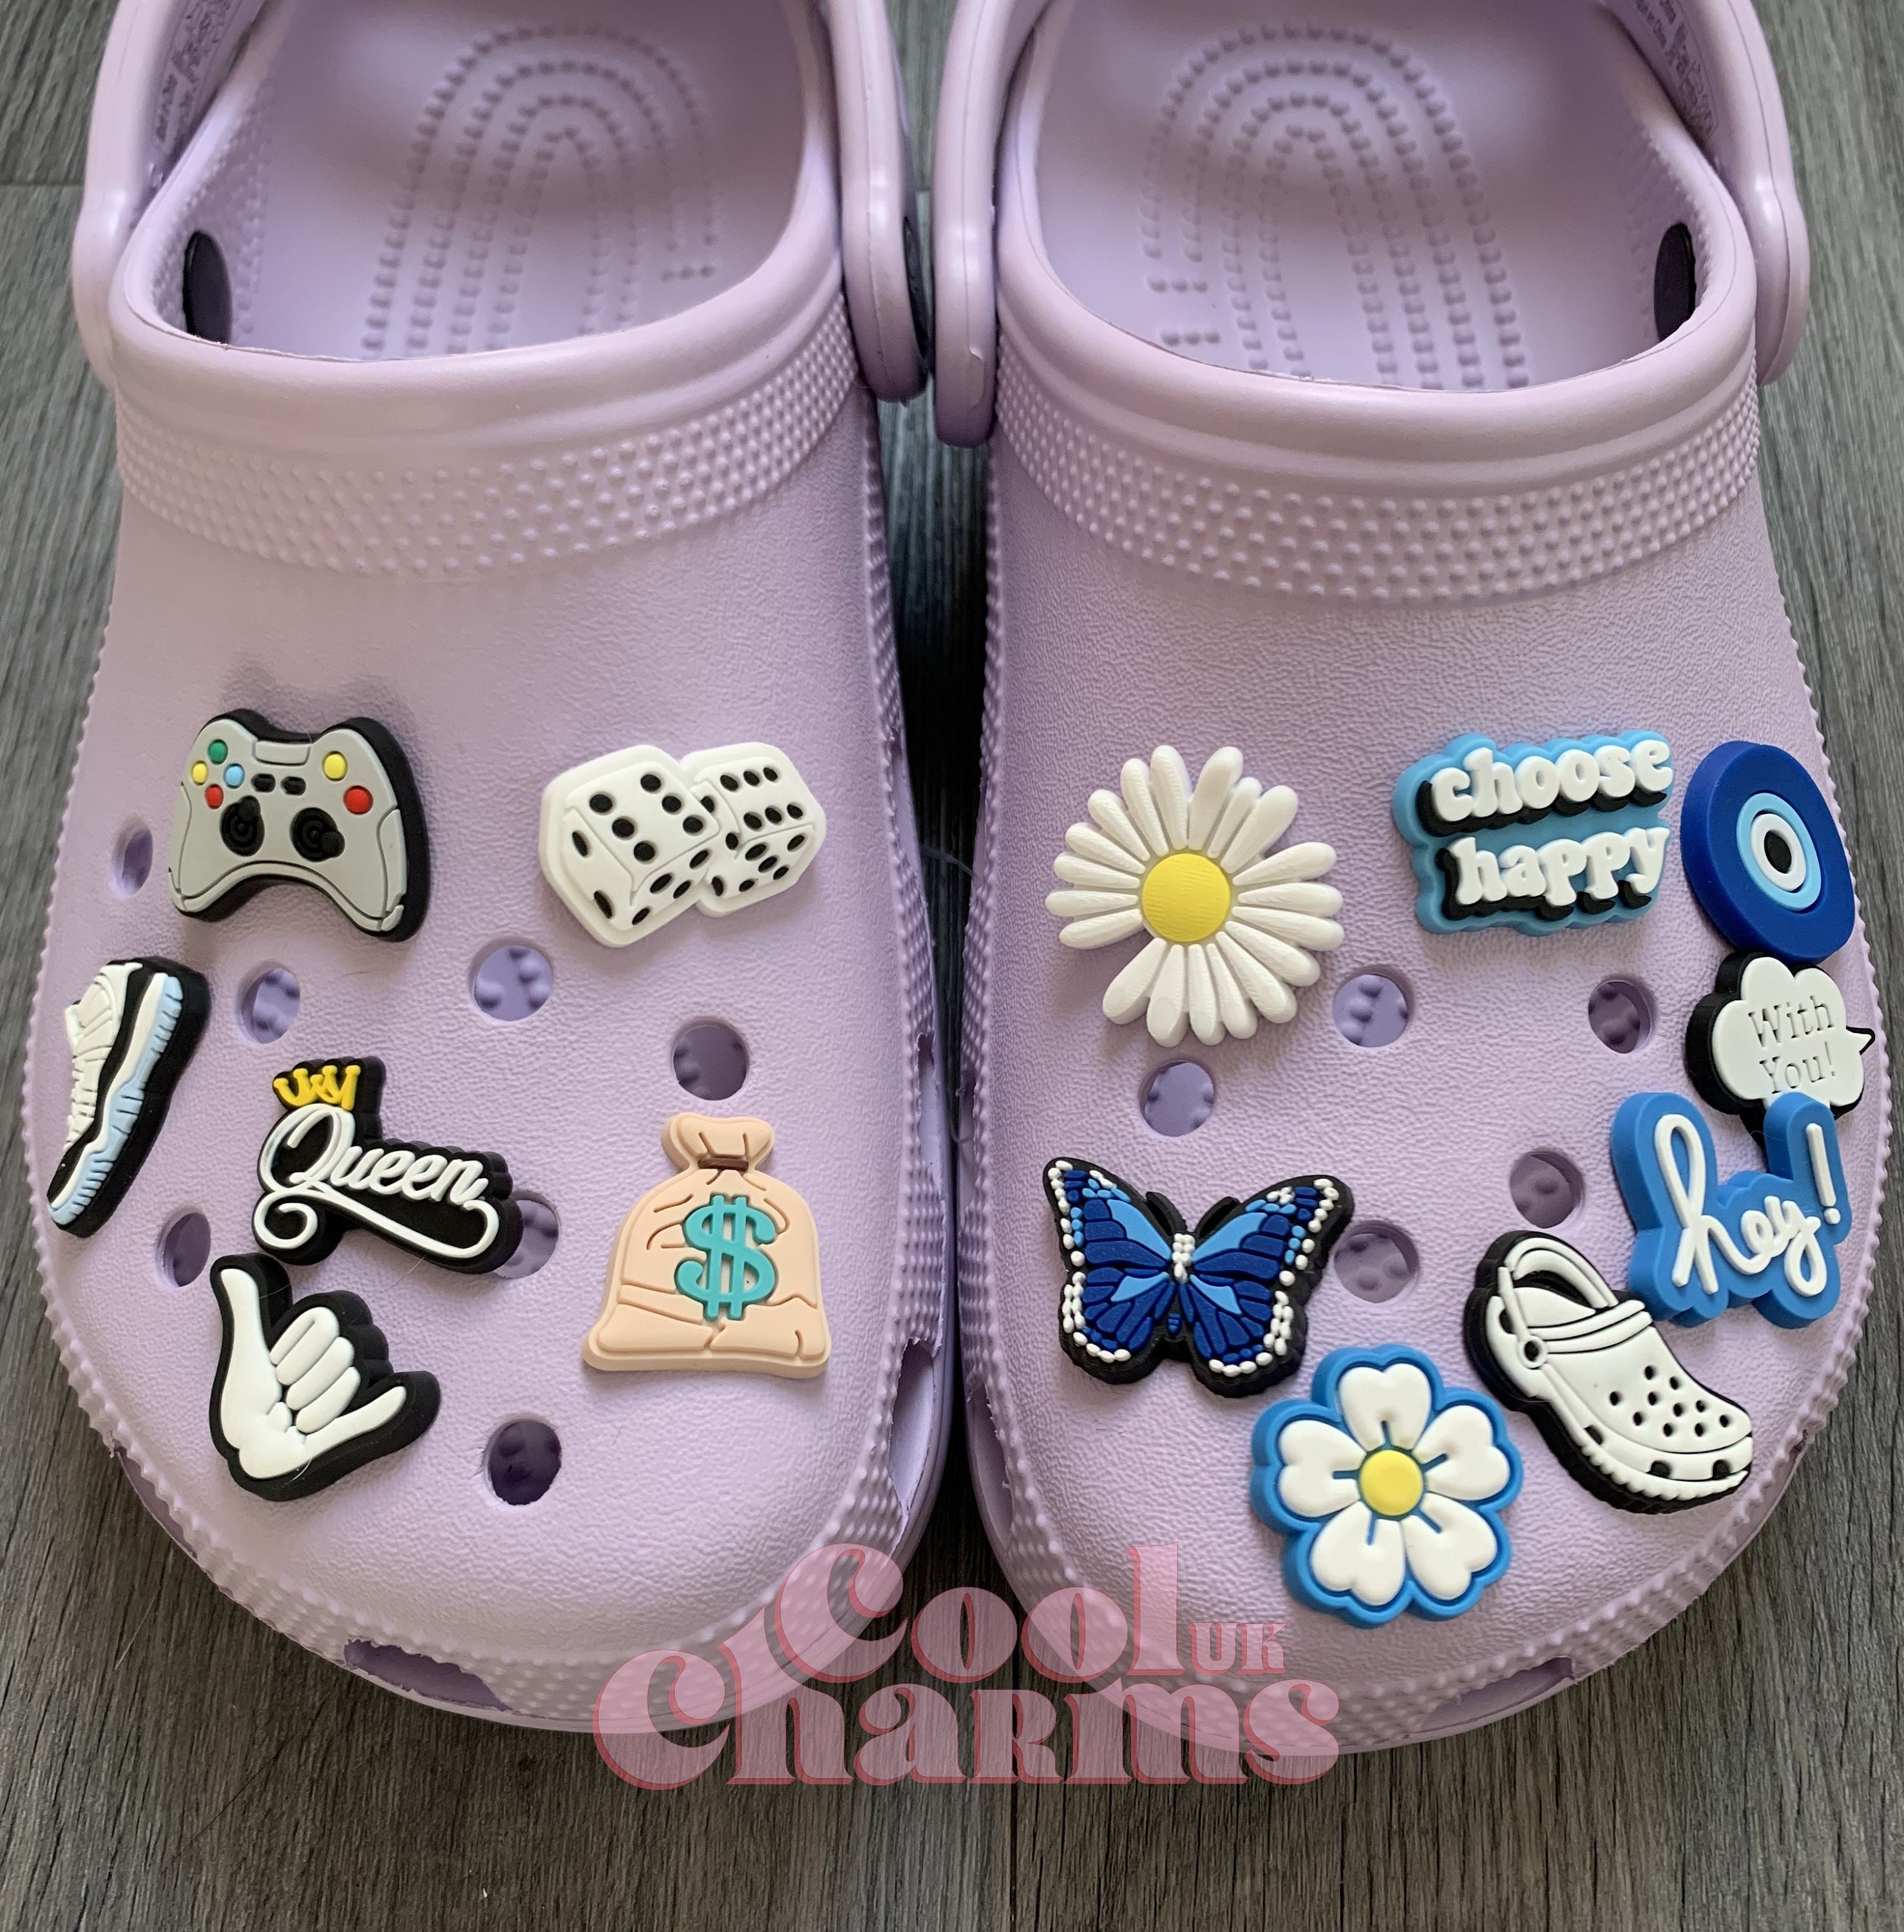 Happy doc - Shoe charms/pins Shoe buttons accessories comics for crocs  $1,50